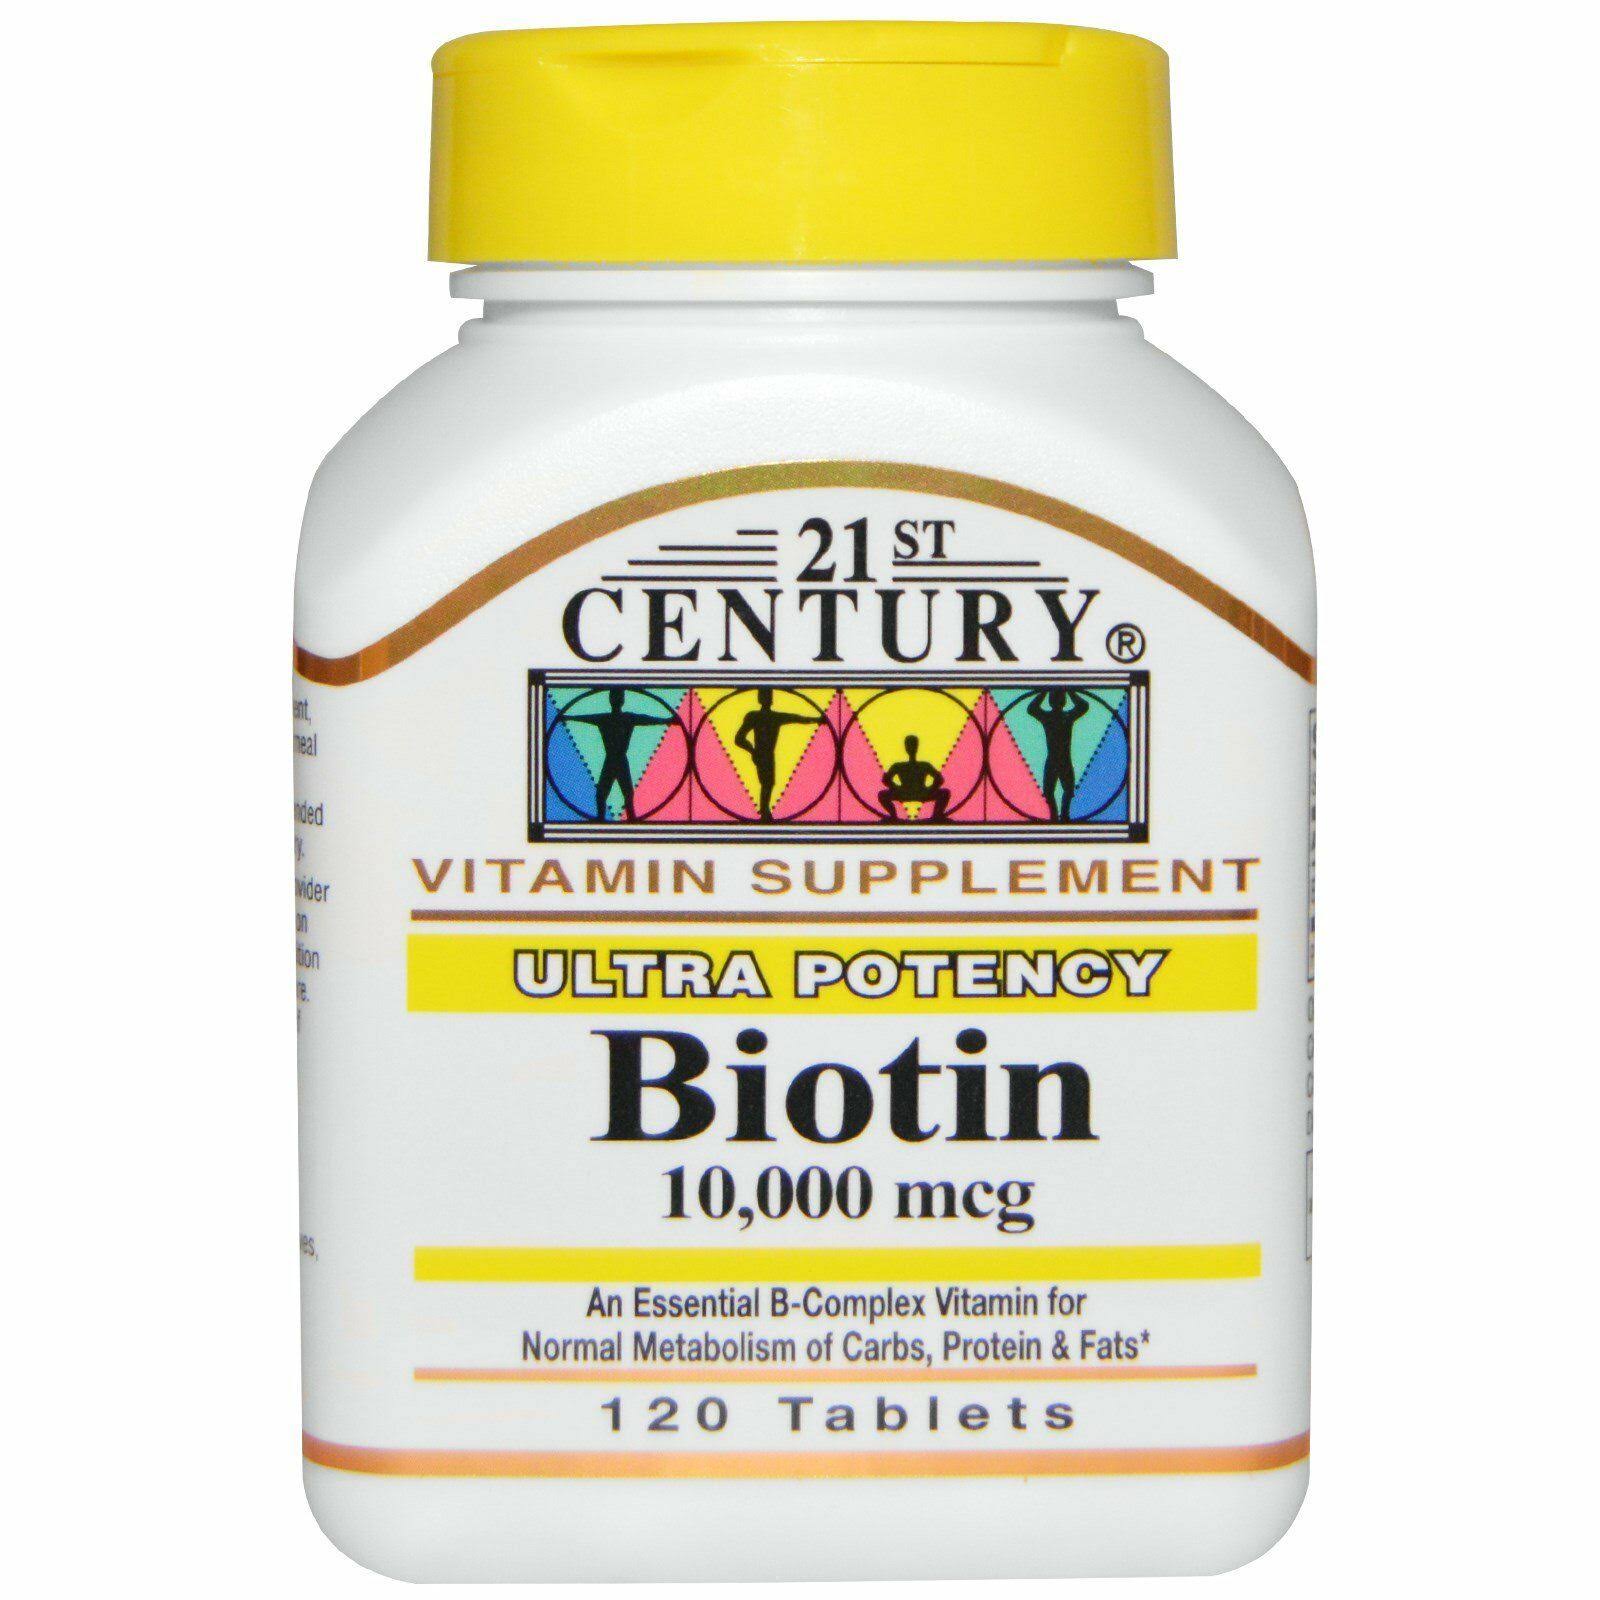 21st Century Biotin Vitamin Supplement - 10,000mcg, 120 Tablets